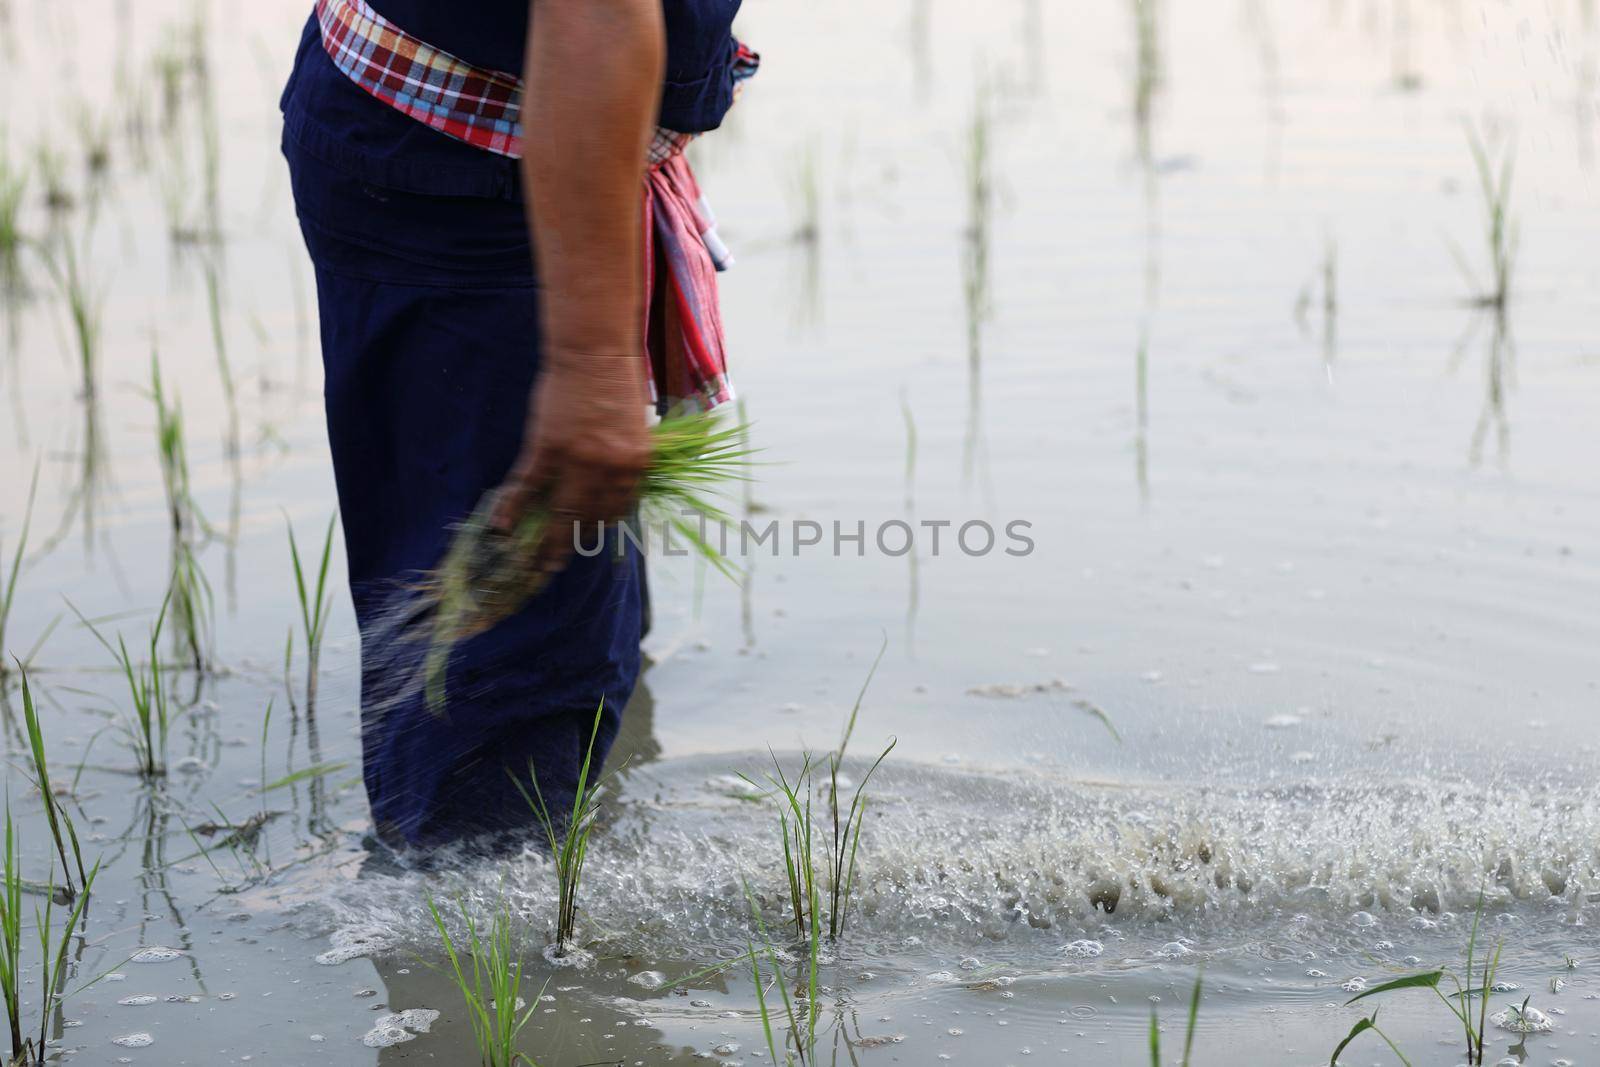 Farmer rice planting on water by piyato